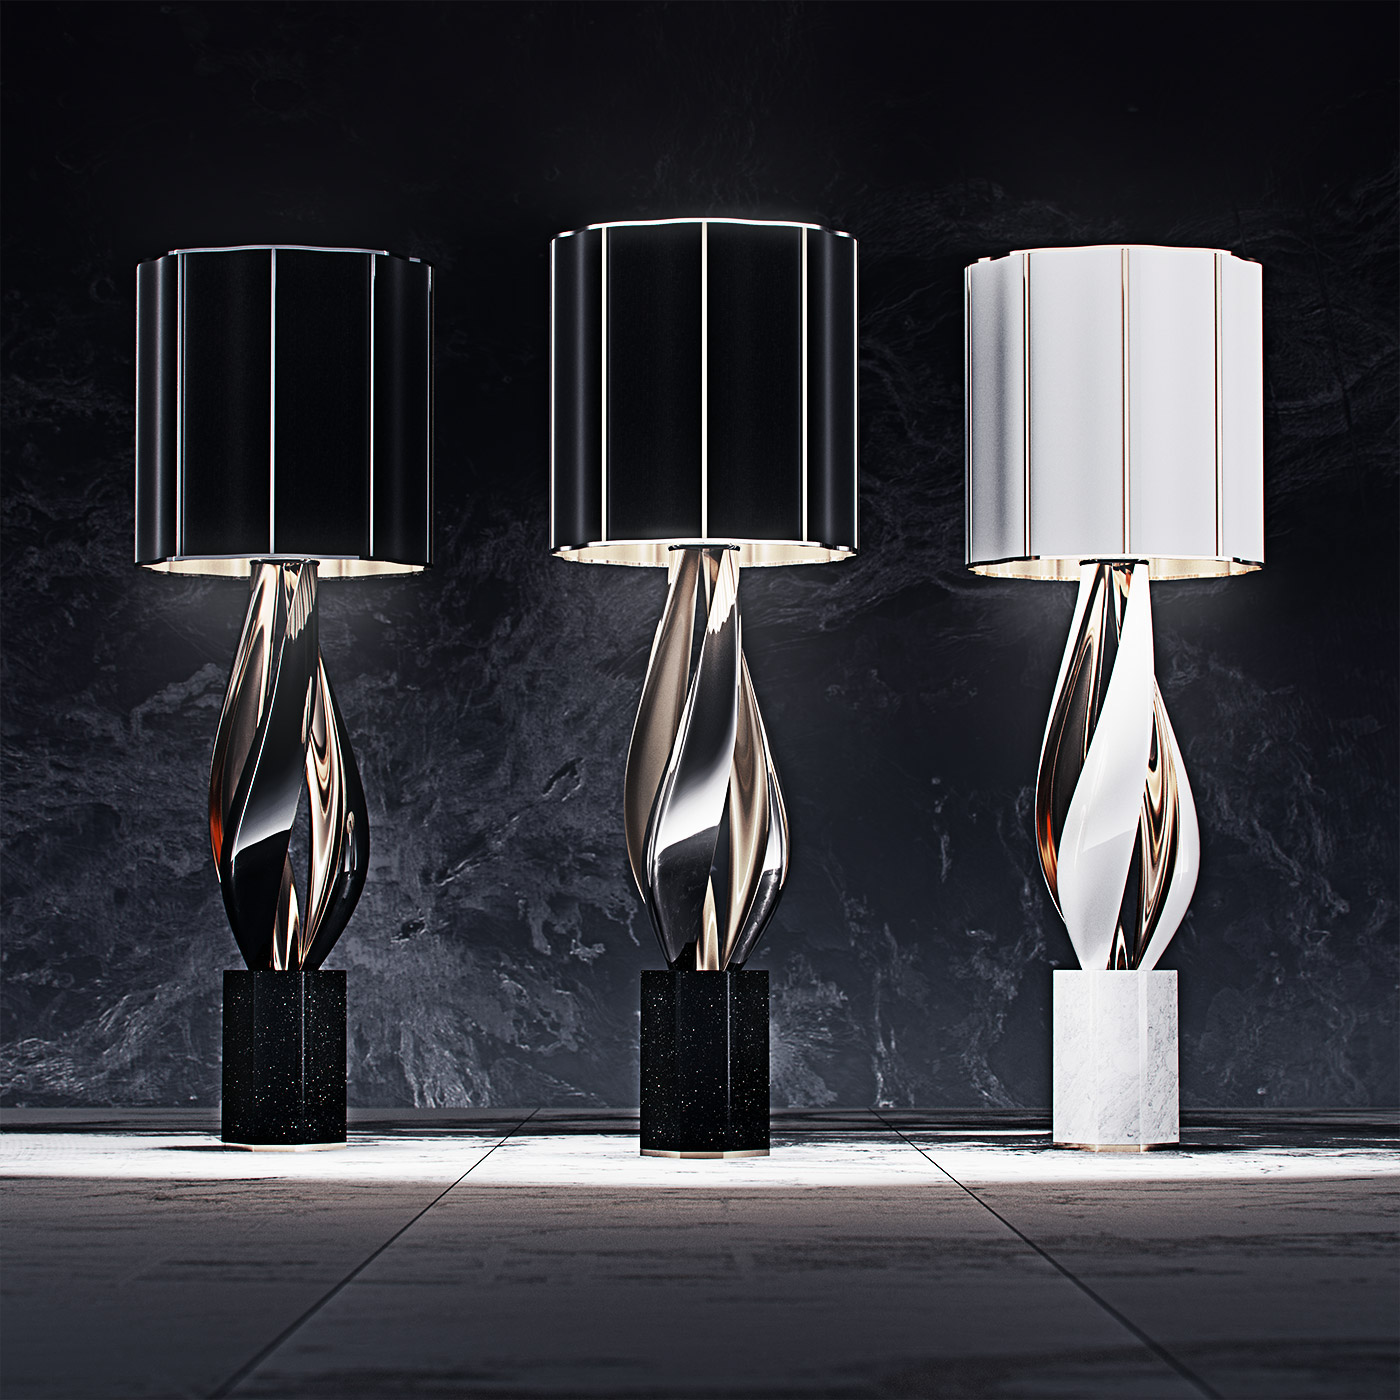 lighting Lamp Interior light highend luxury product sculptural sculpture Spiral shape modern futuristic